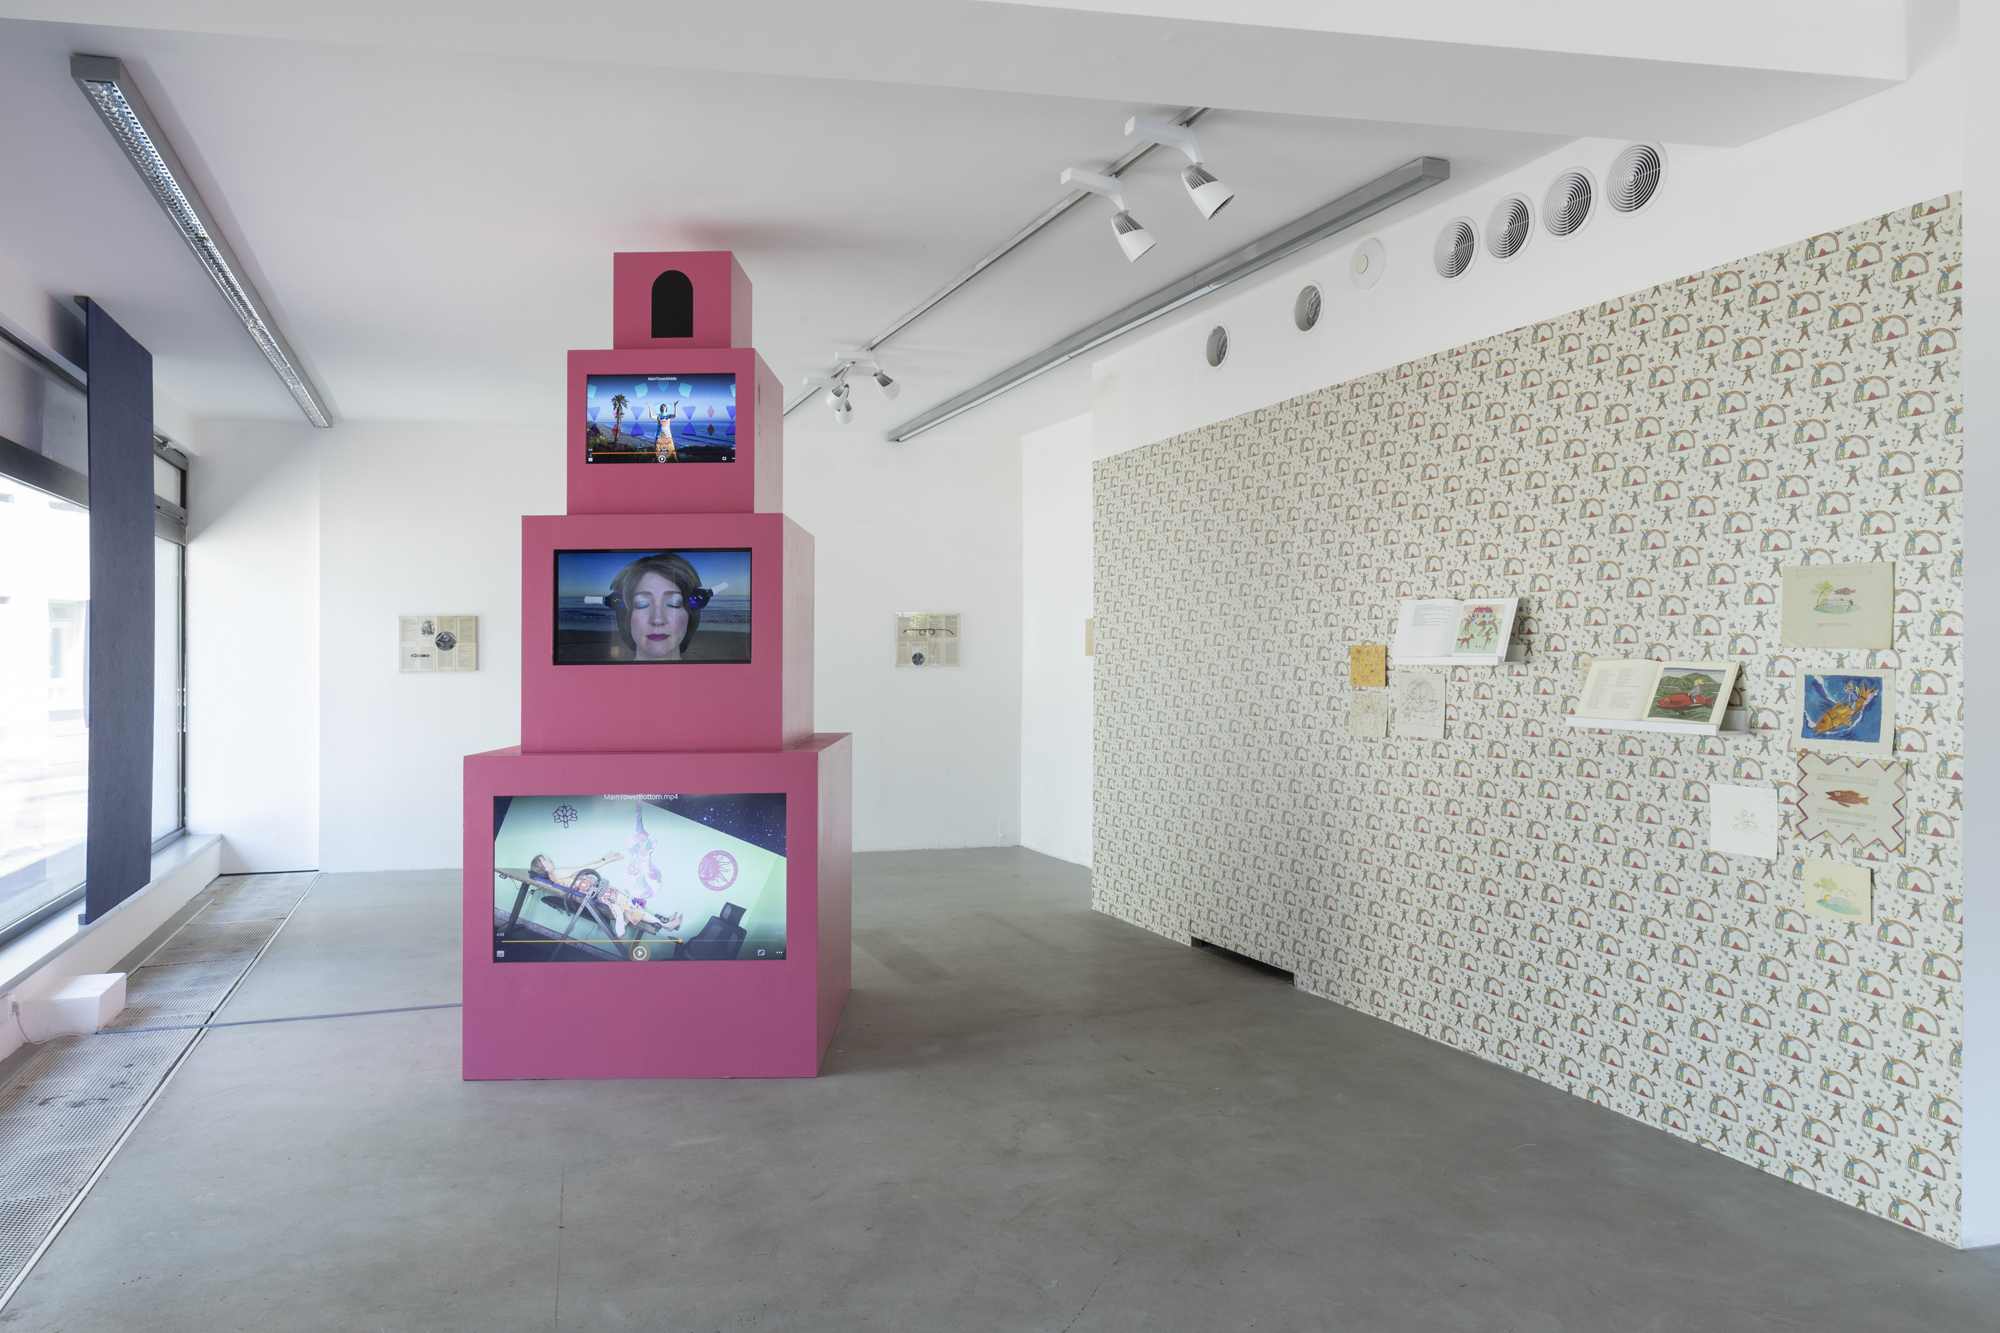 Installation view featuring works from Jakob Jakobsen, Niklas Lichti, Shana Moulton & Tom Seidmann-Freud 